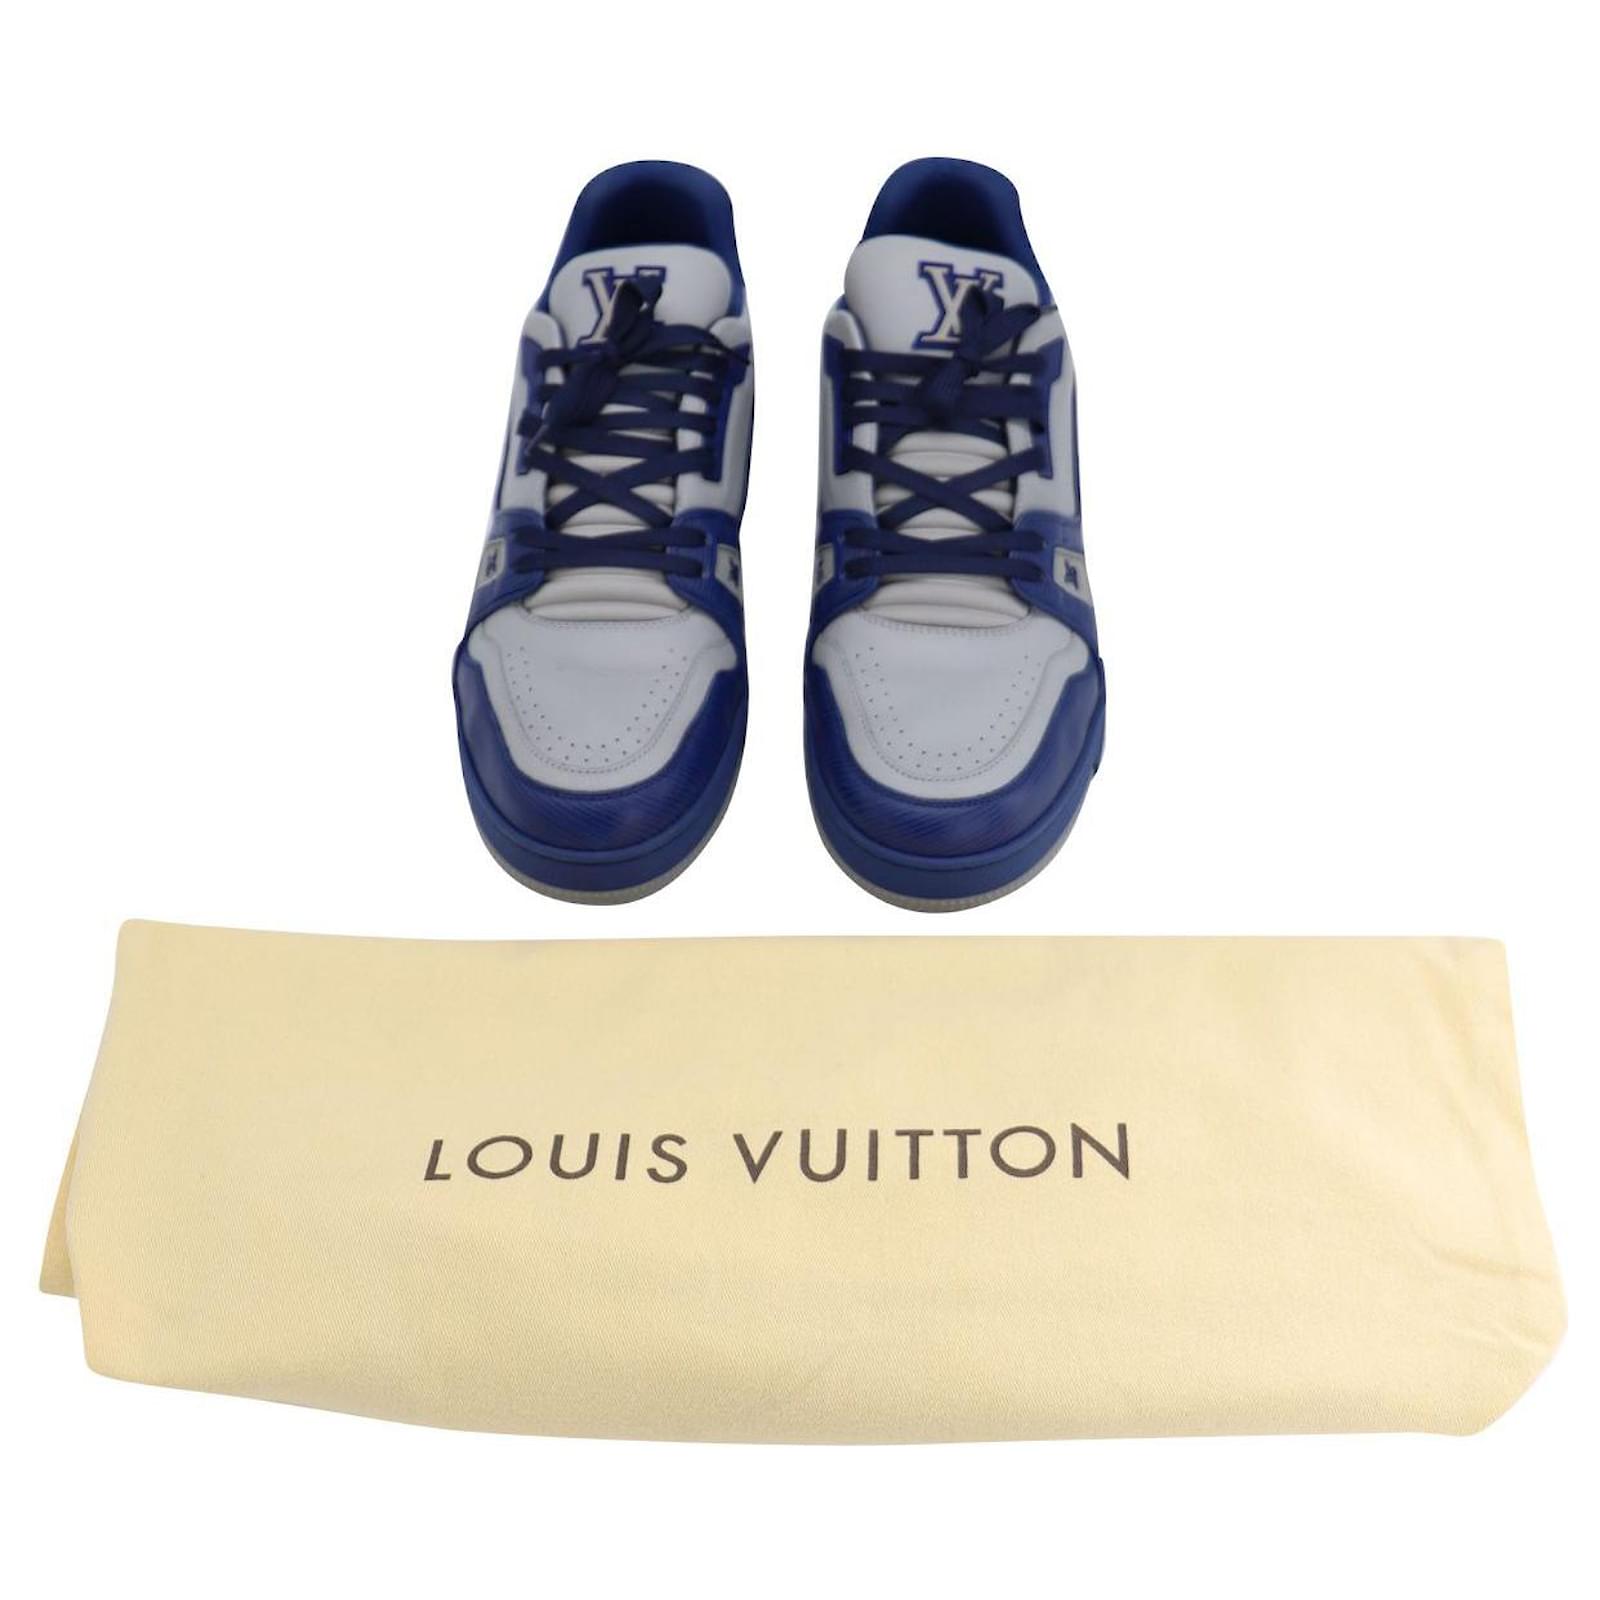 LOUIS VUITTON LV Trainer Sneaker Navy. Size 5